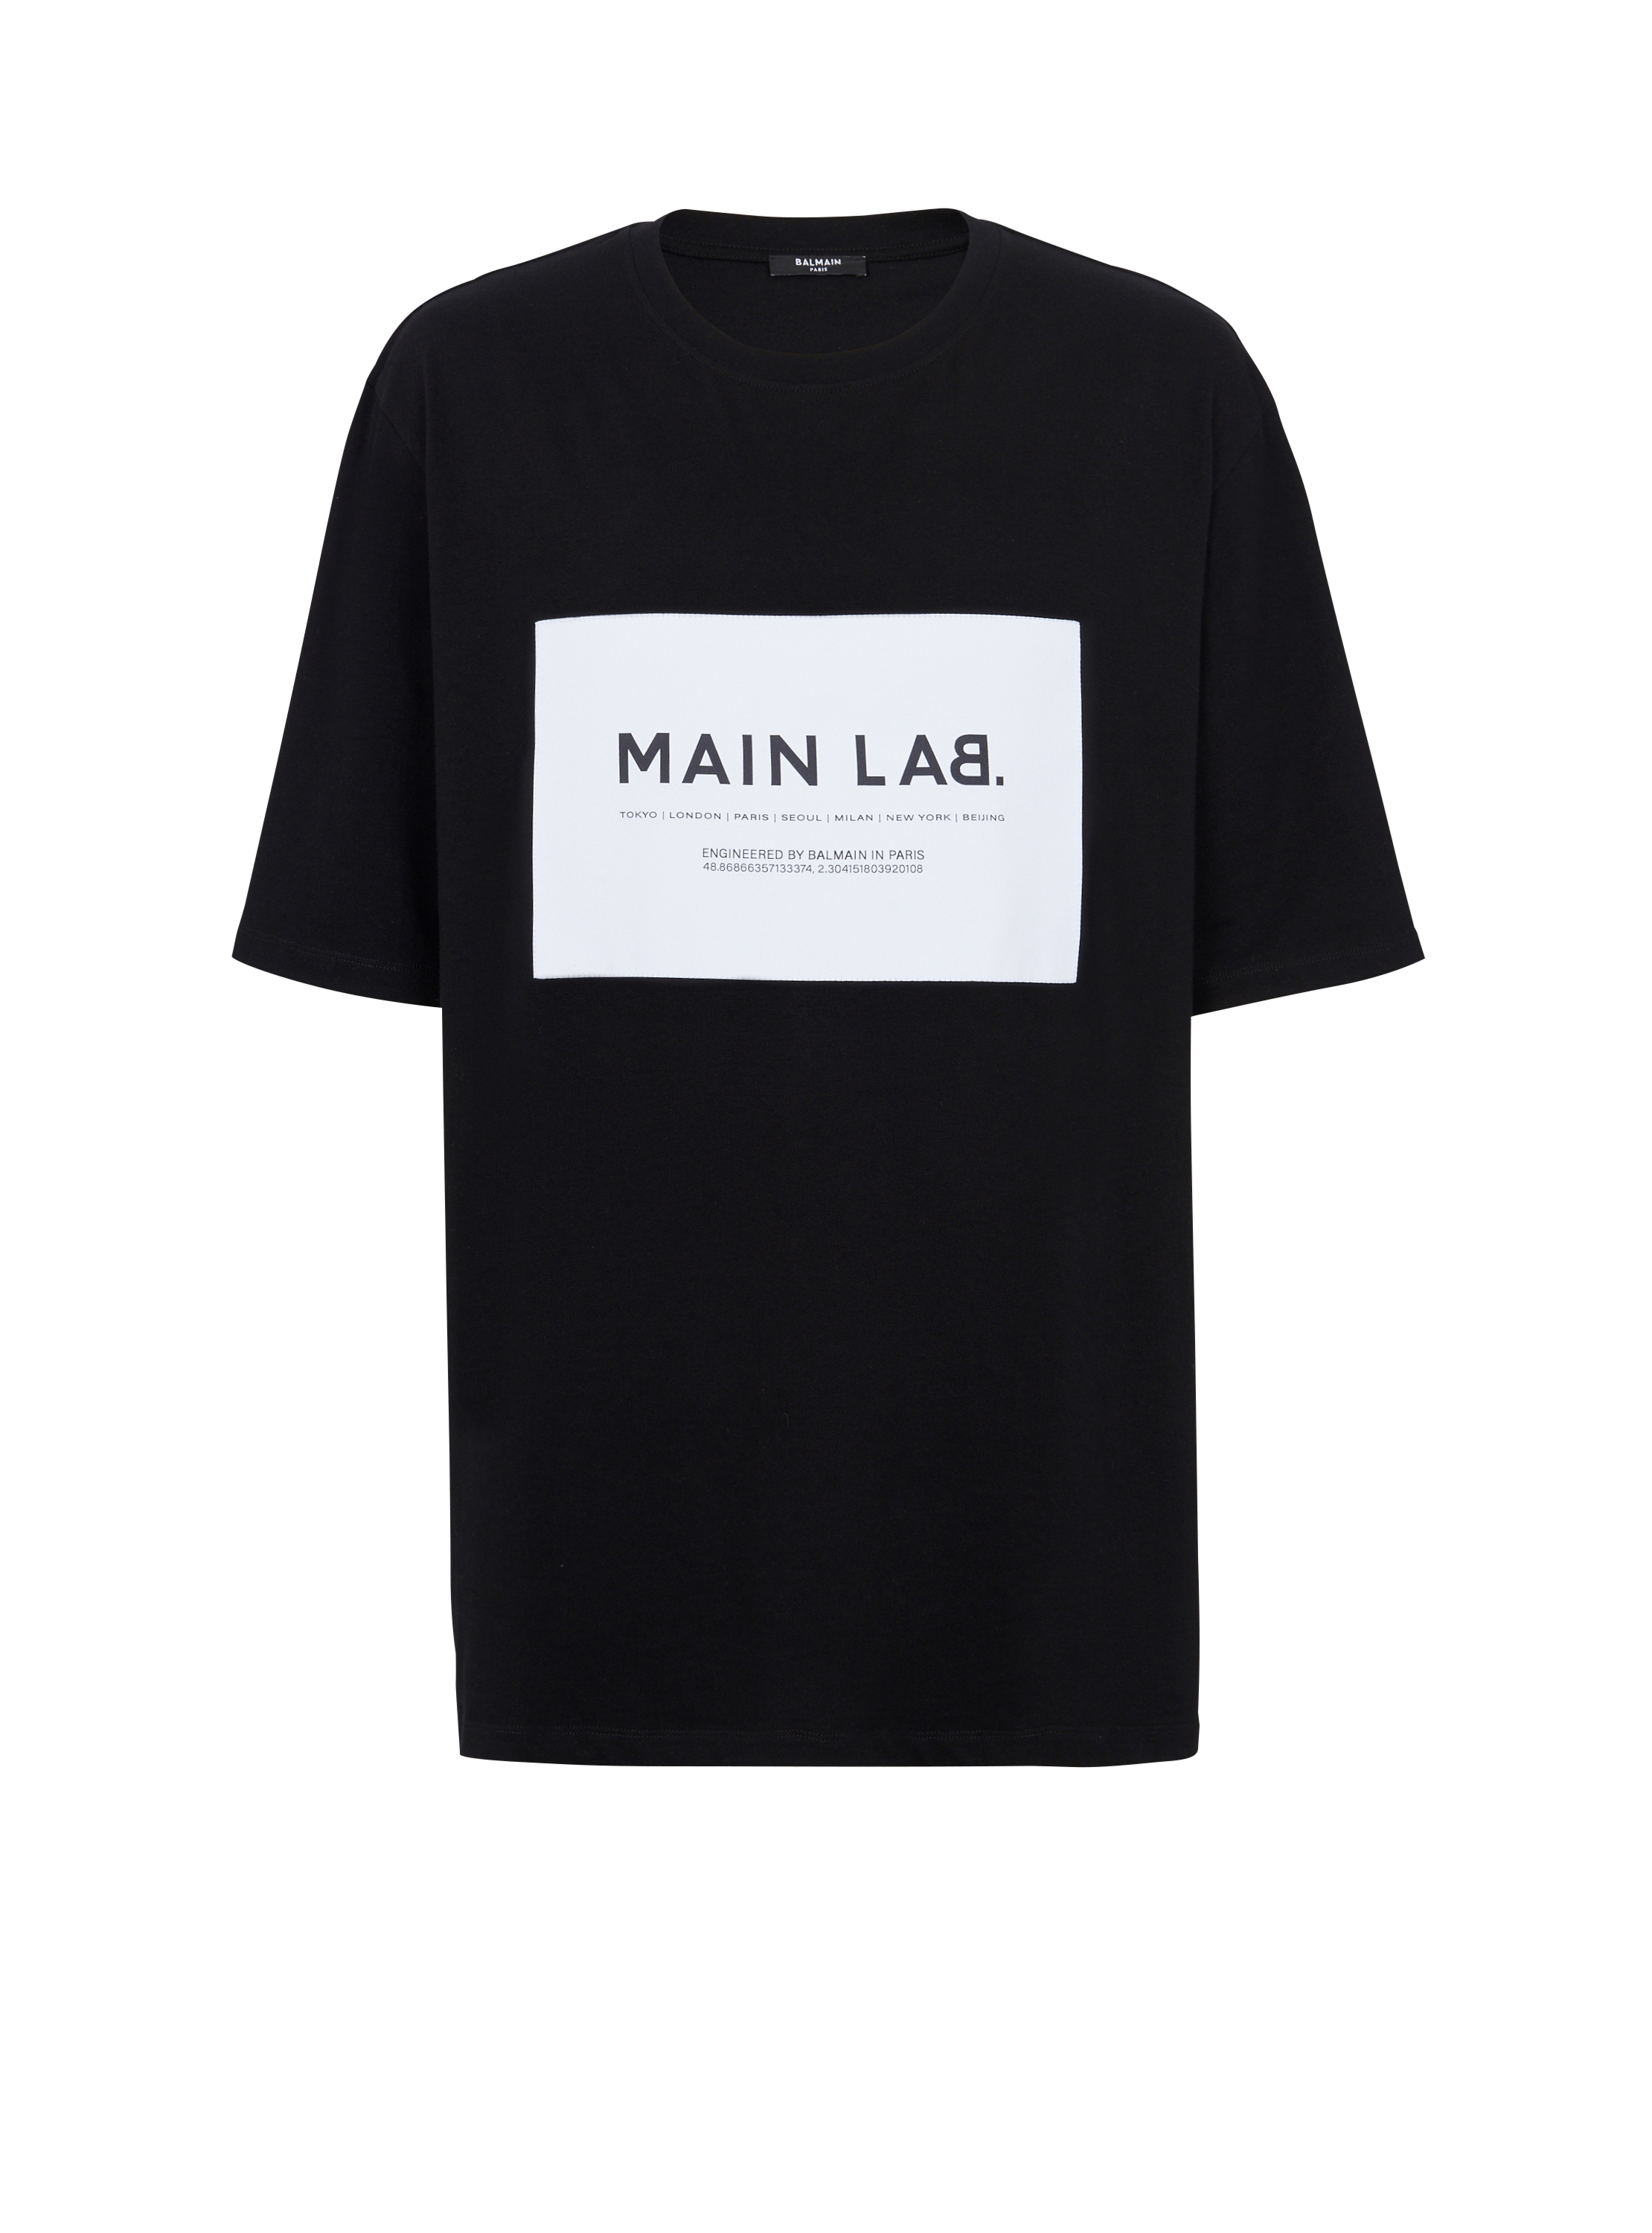 T-Shirt mit Main Lab-Etikett